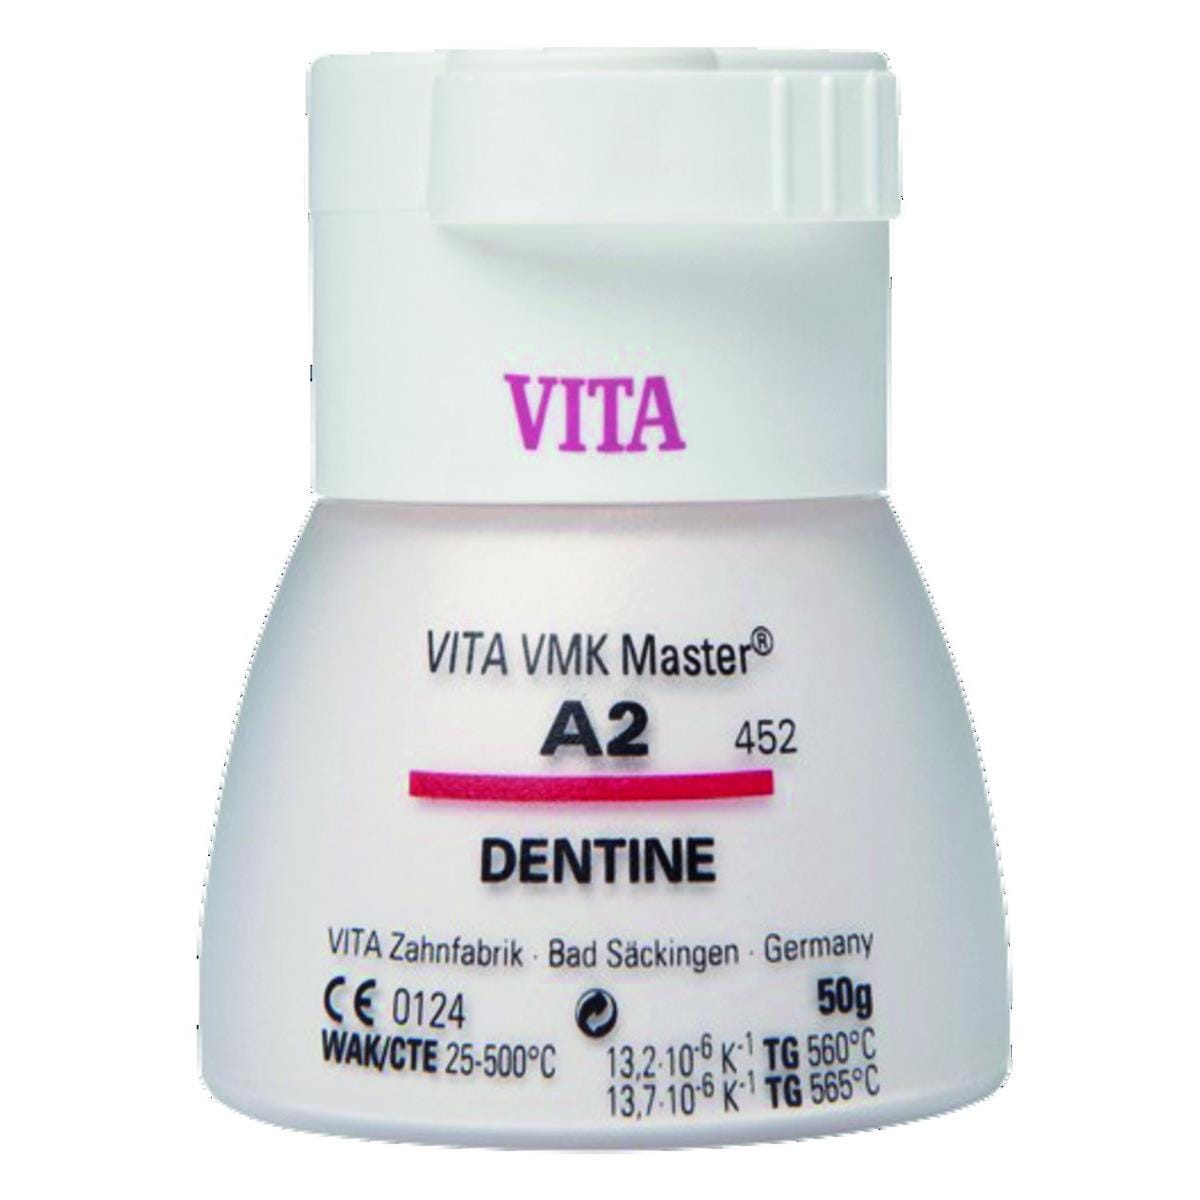 VMK Master VITA - Dentine - 2L1,5 - Le flacon de 50 g